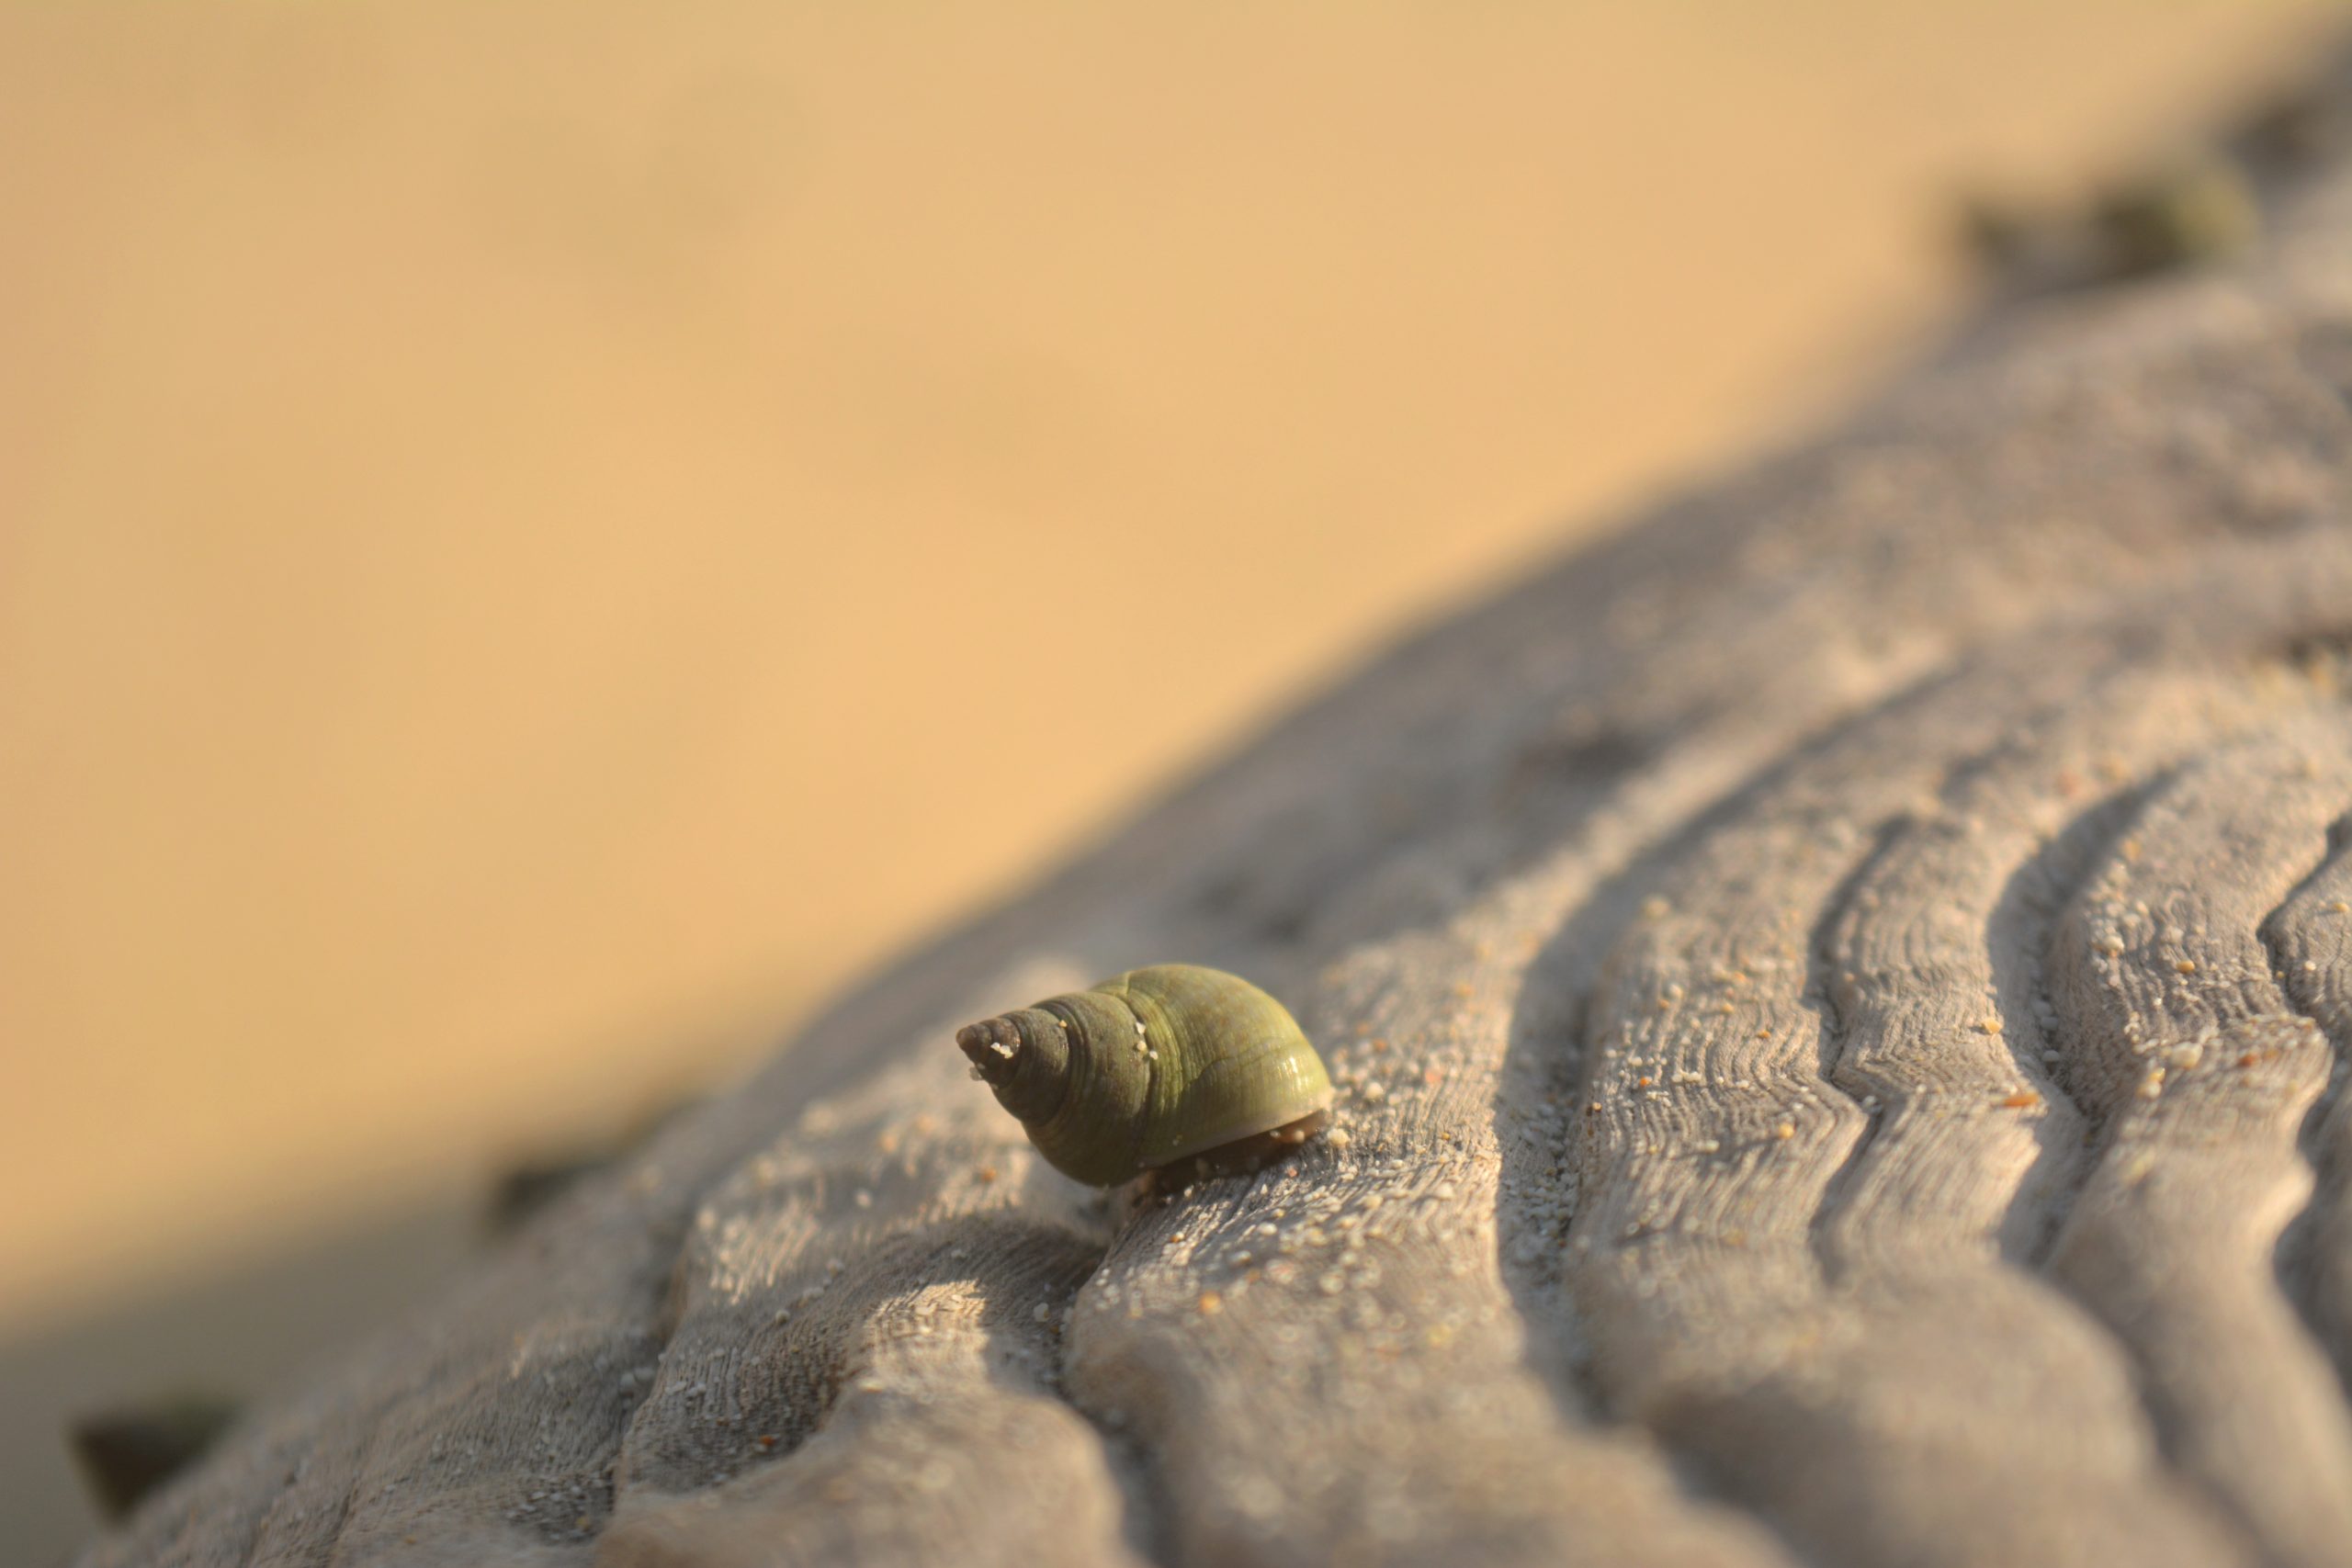 A small sea shell